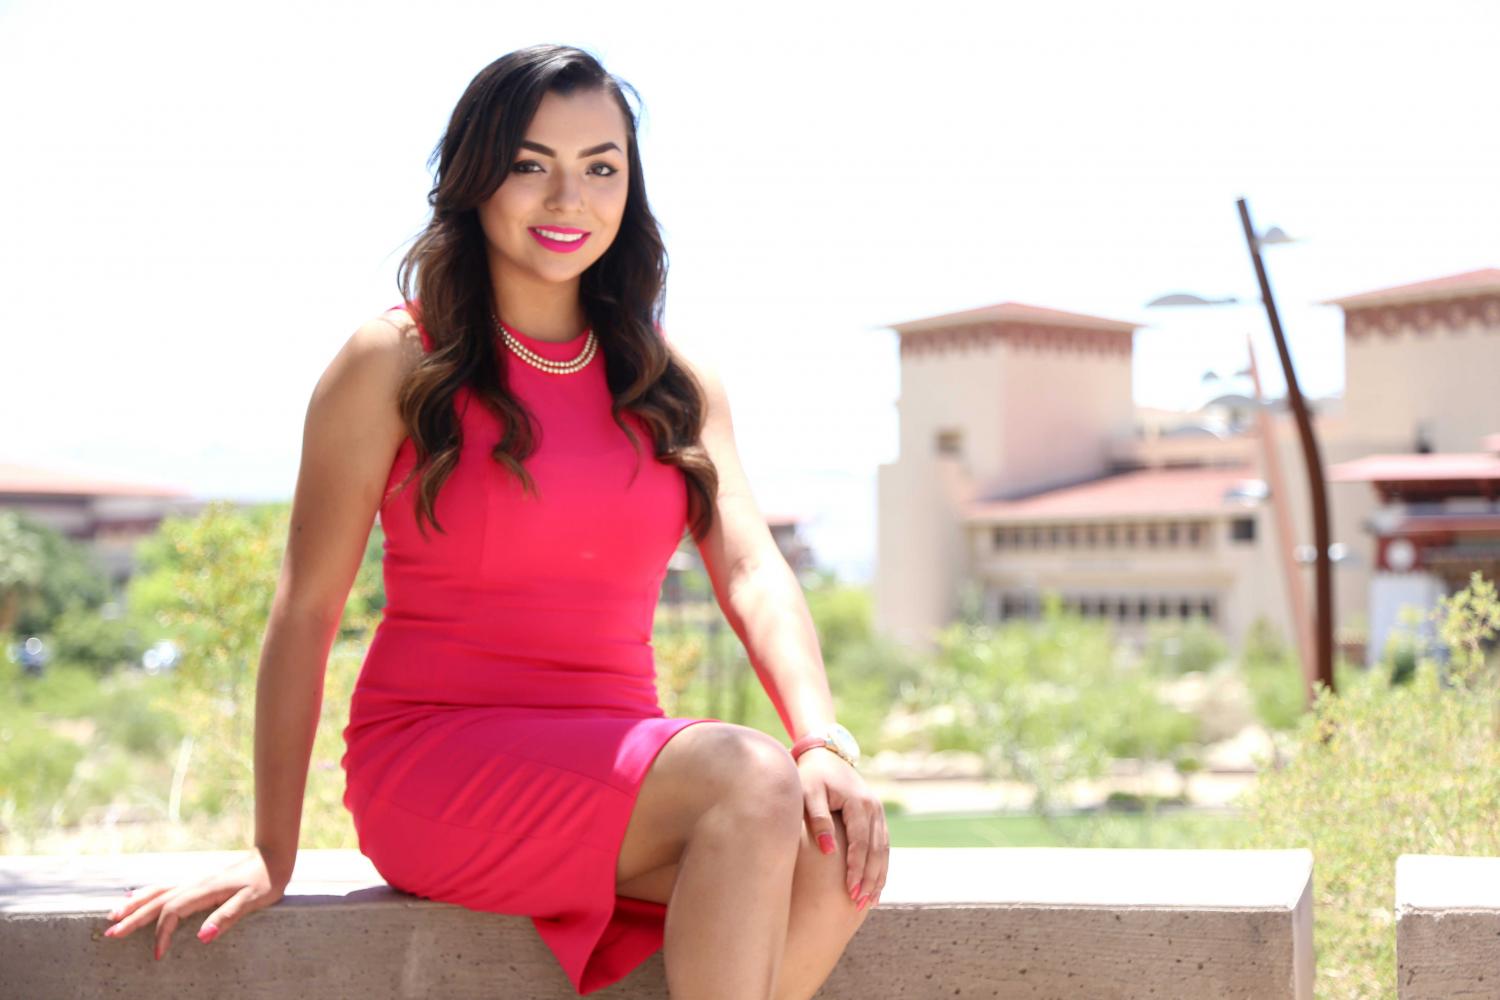 Meet your new SGA president: Kristen Ahumada